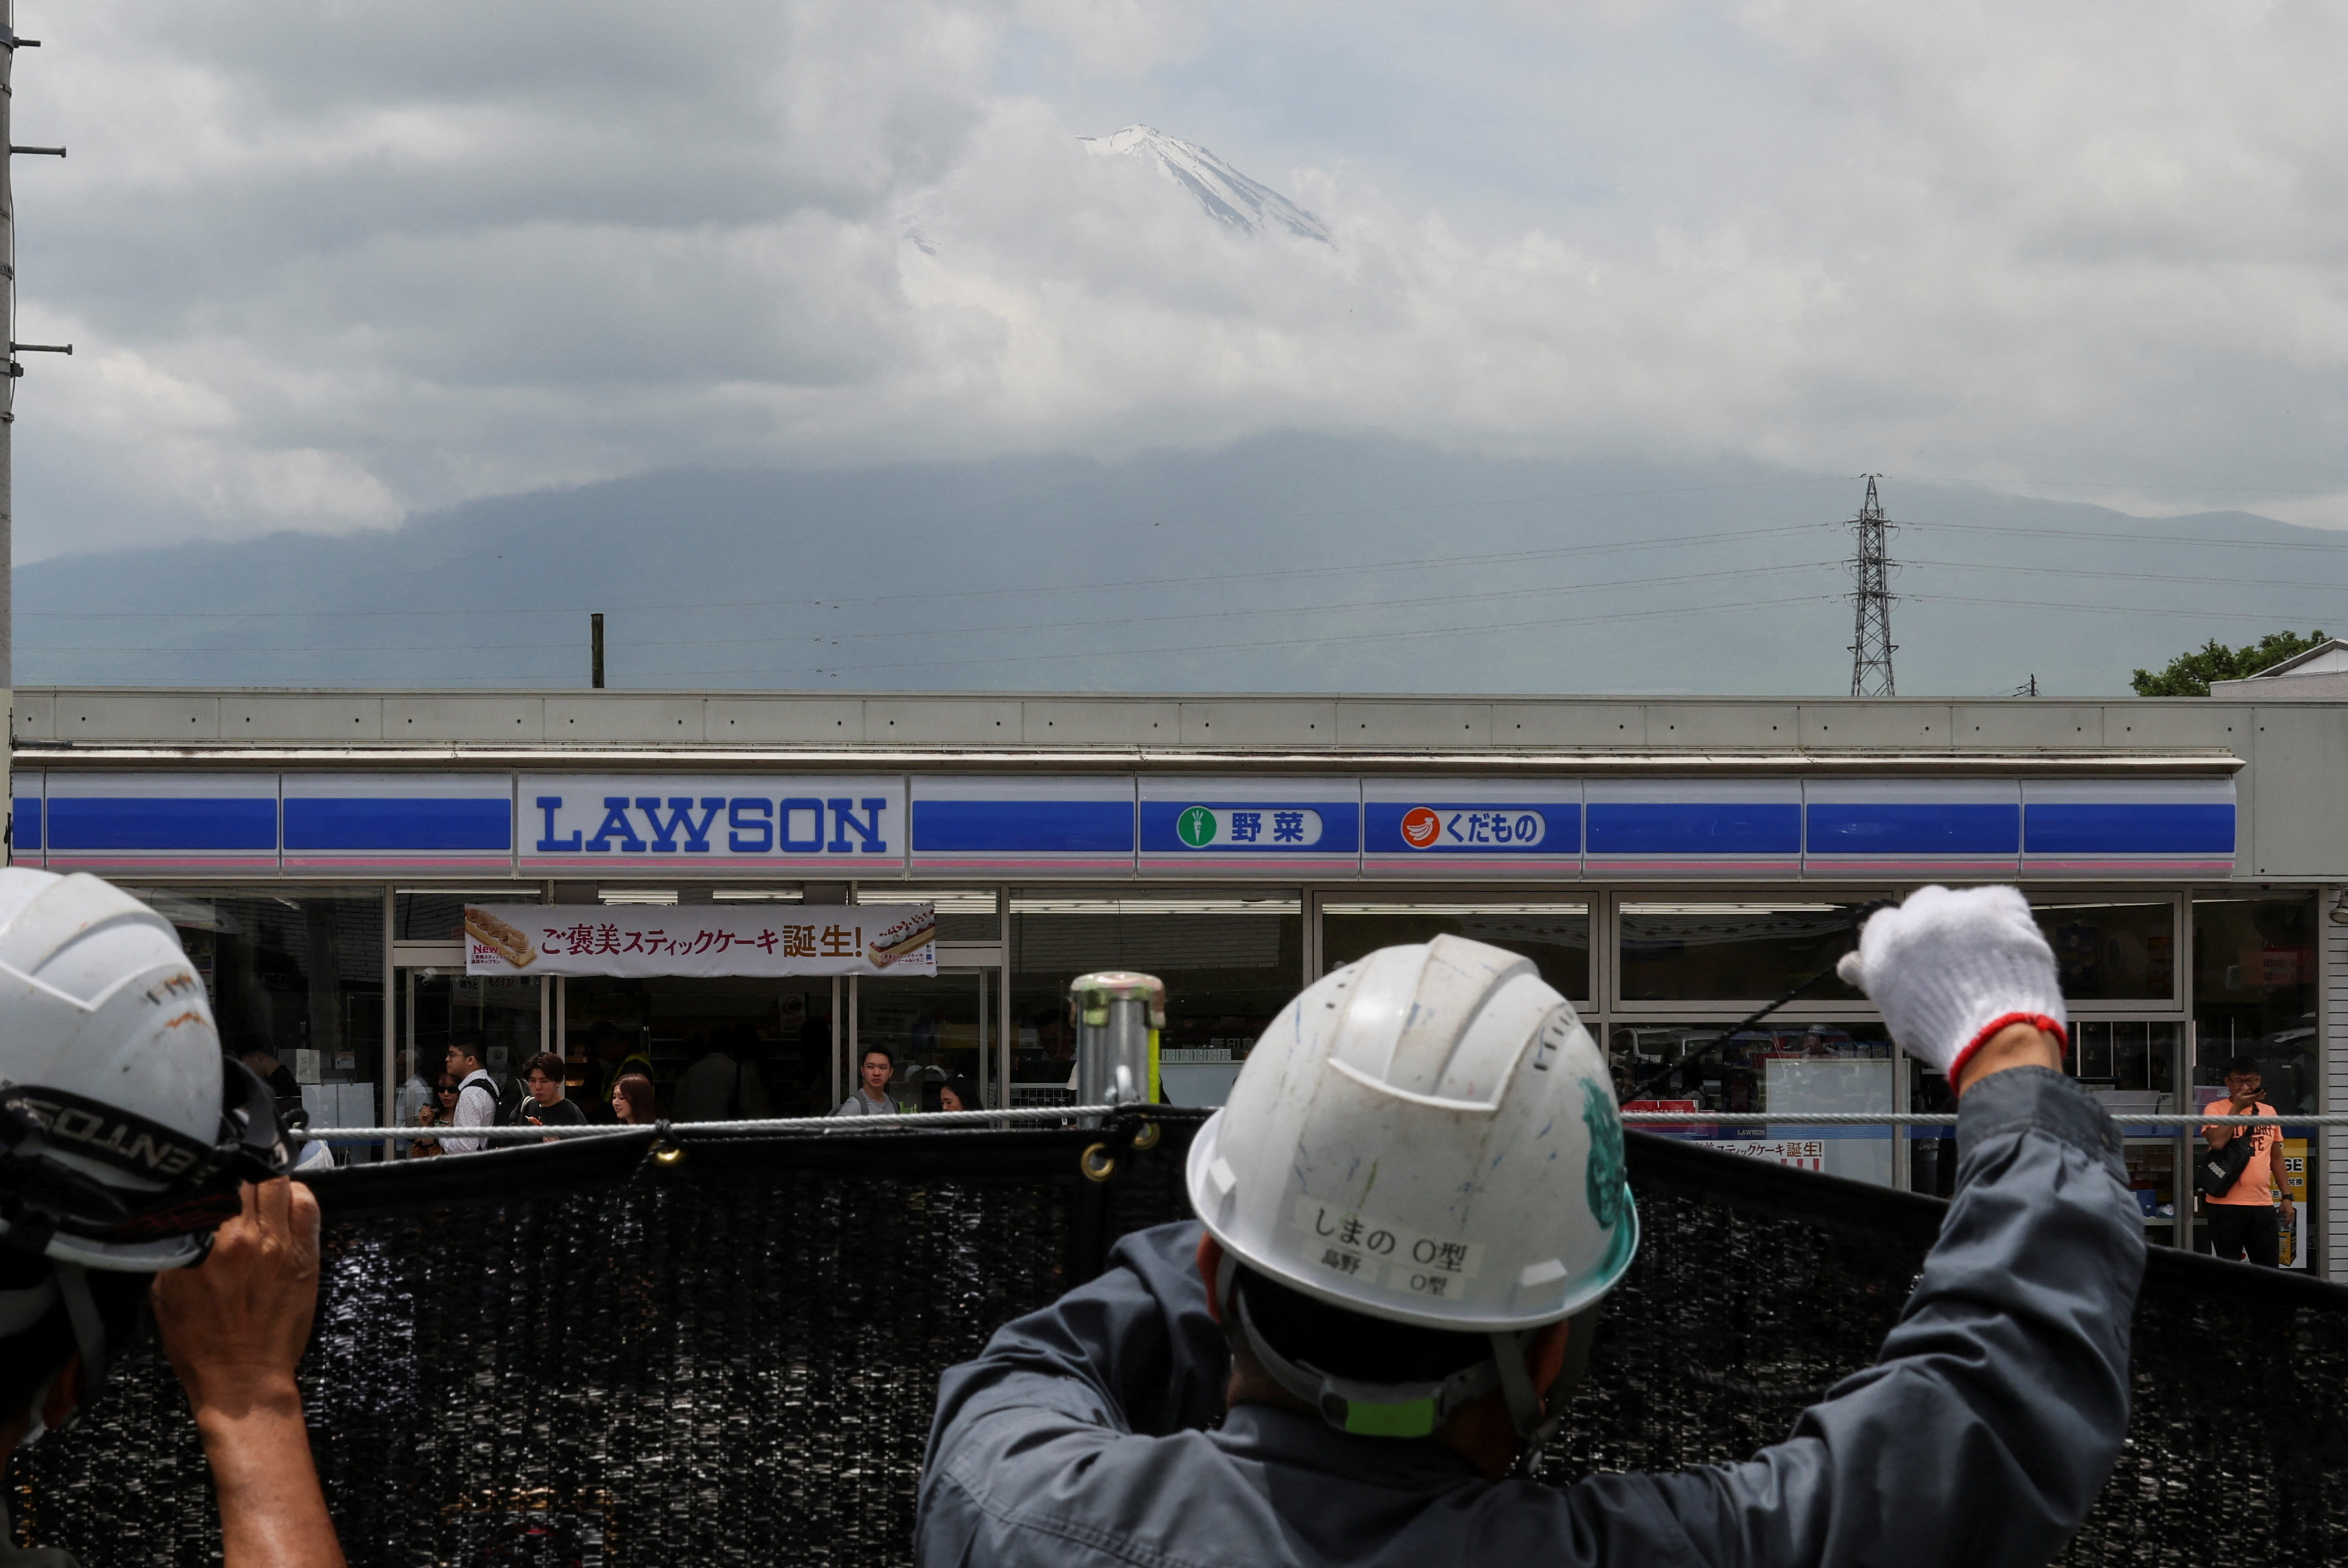 Workers erect a barrier to block the view of a popular Mount Fuji photo spot, in Fujikawaguchiko town